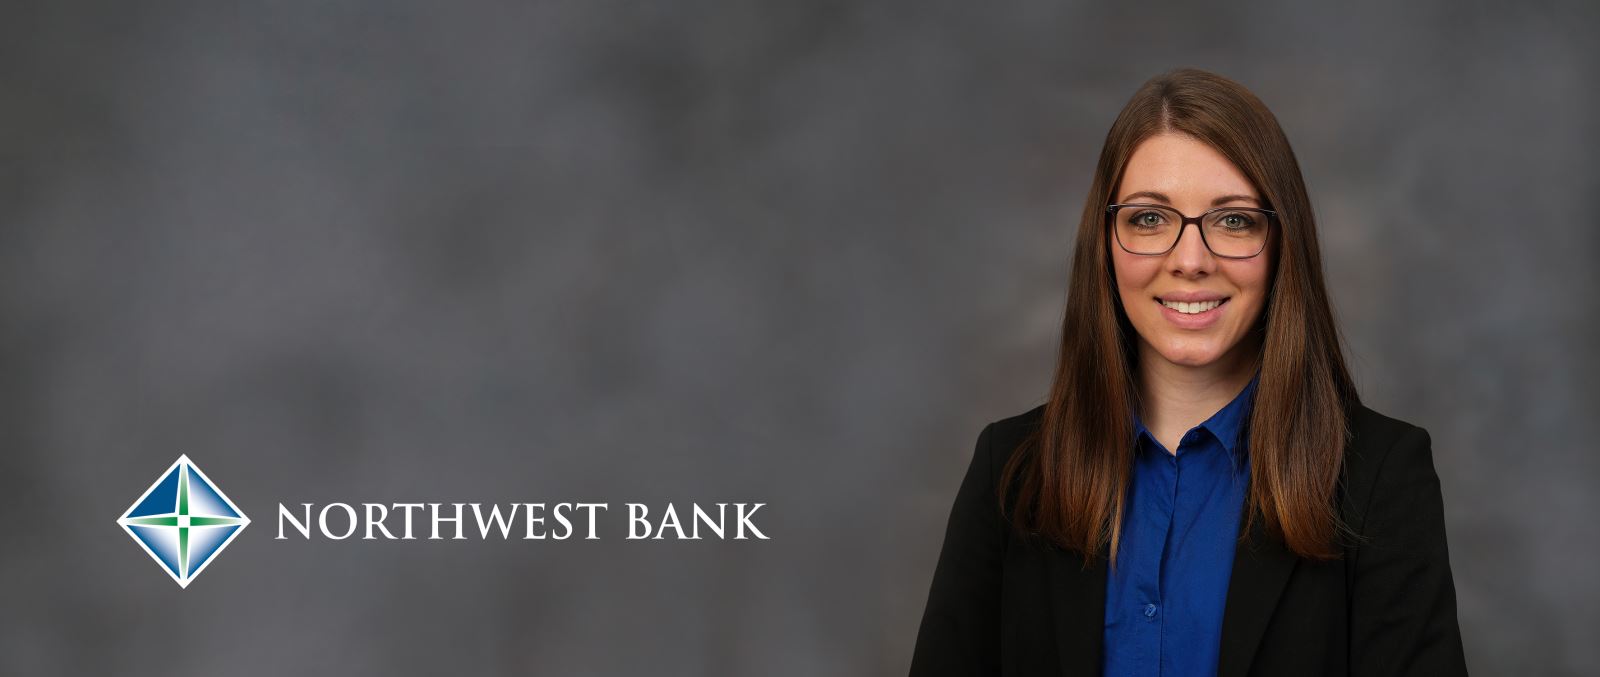 Jessica Juza, Personal Banker Northwest Bank